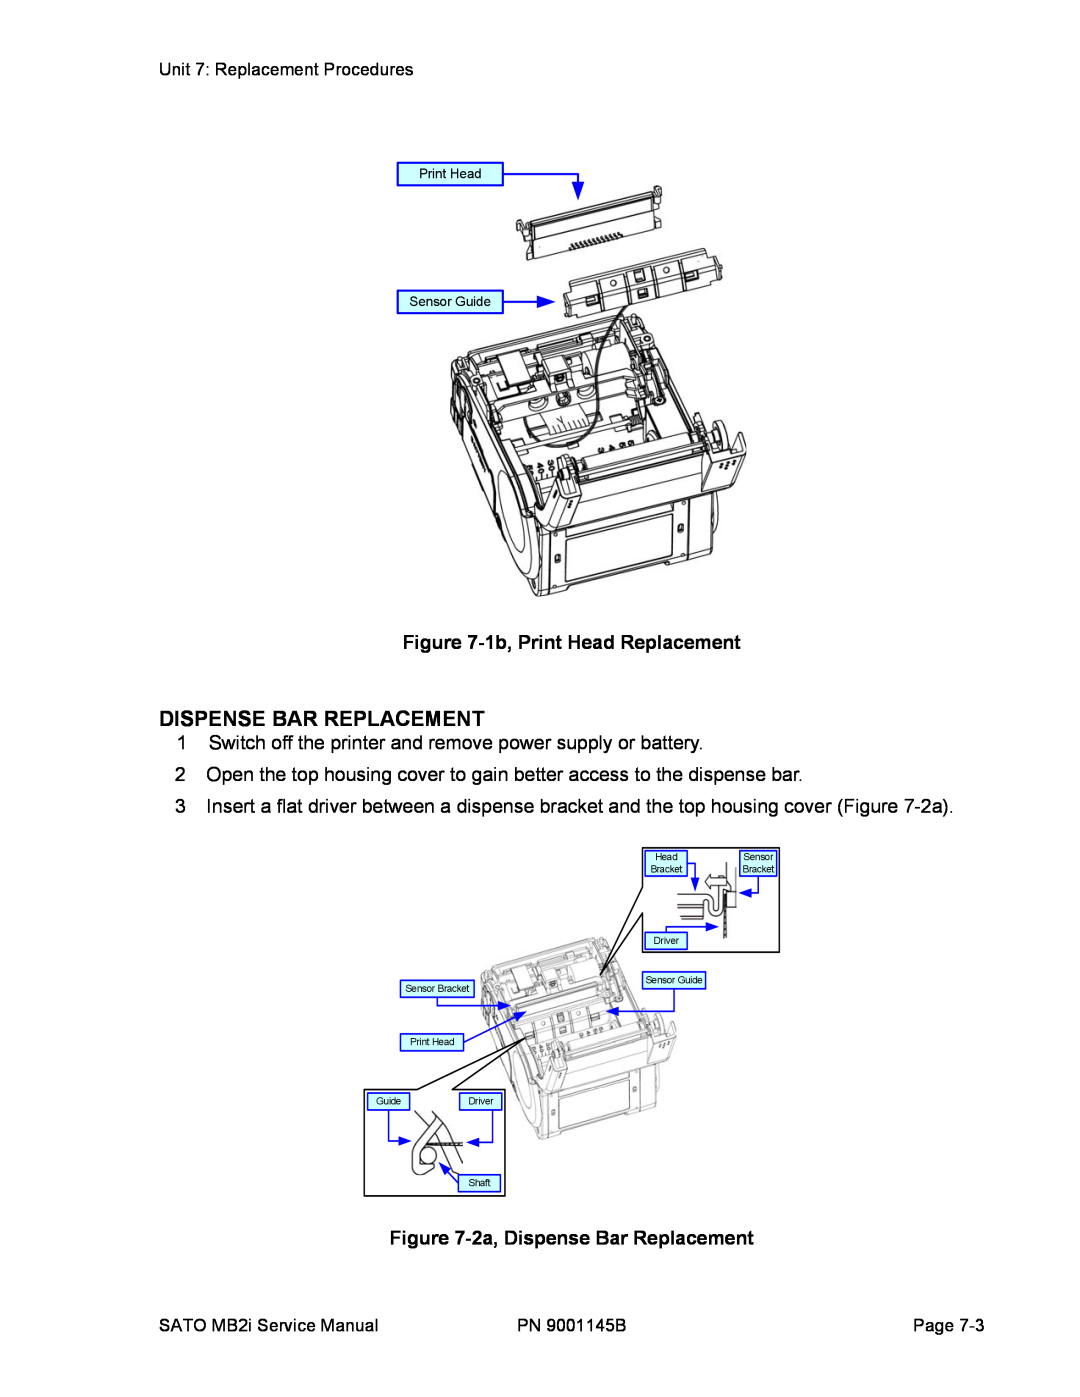 SATO 200i manual 1b, Print Head Replacement, 2a, Dispense Bar Replacement 